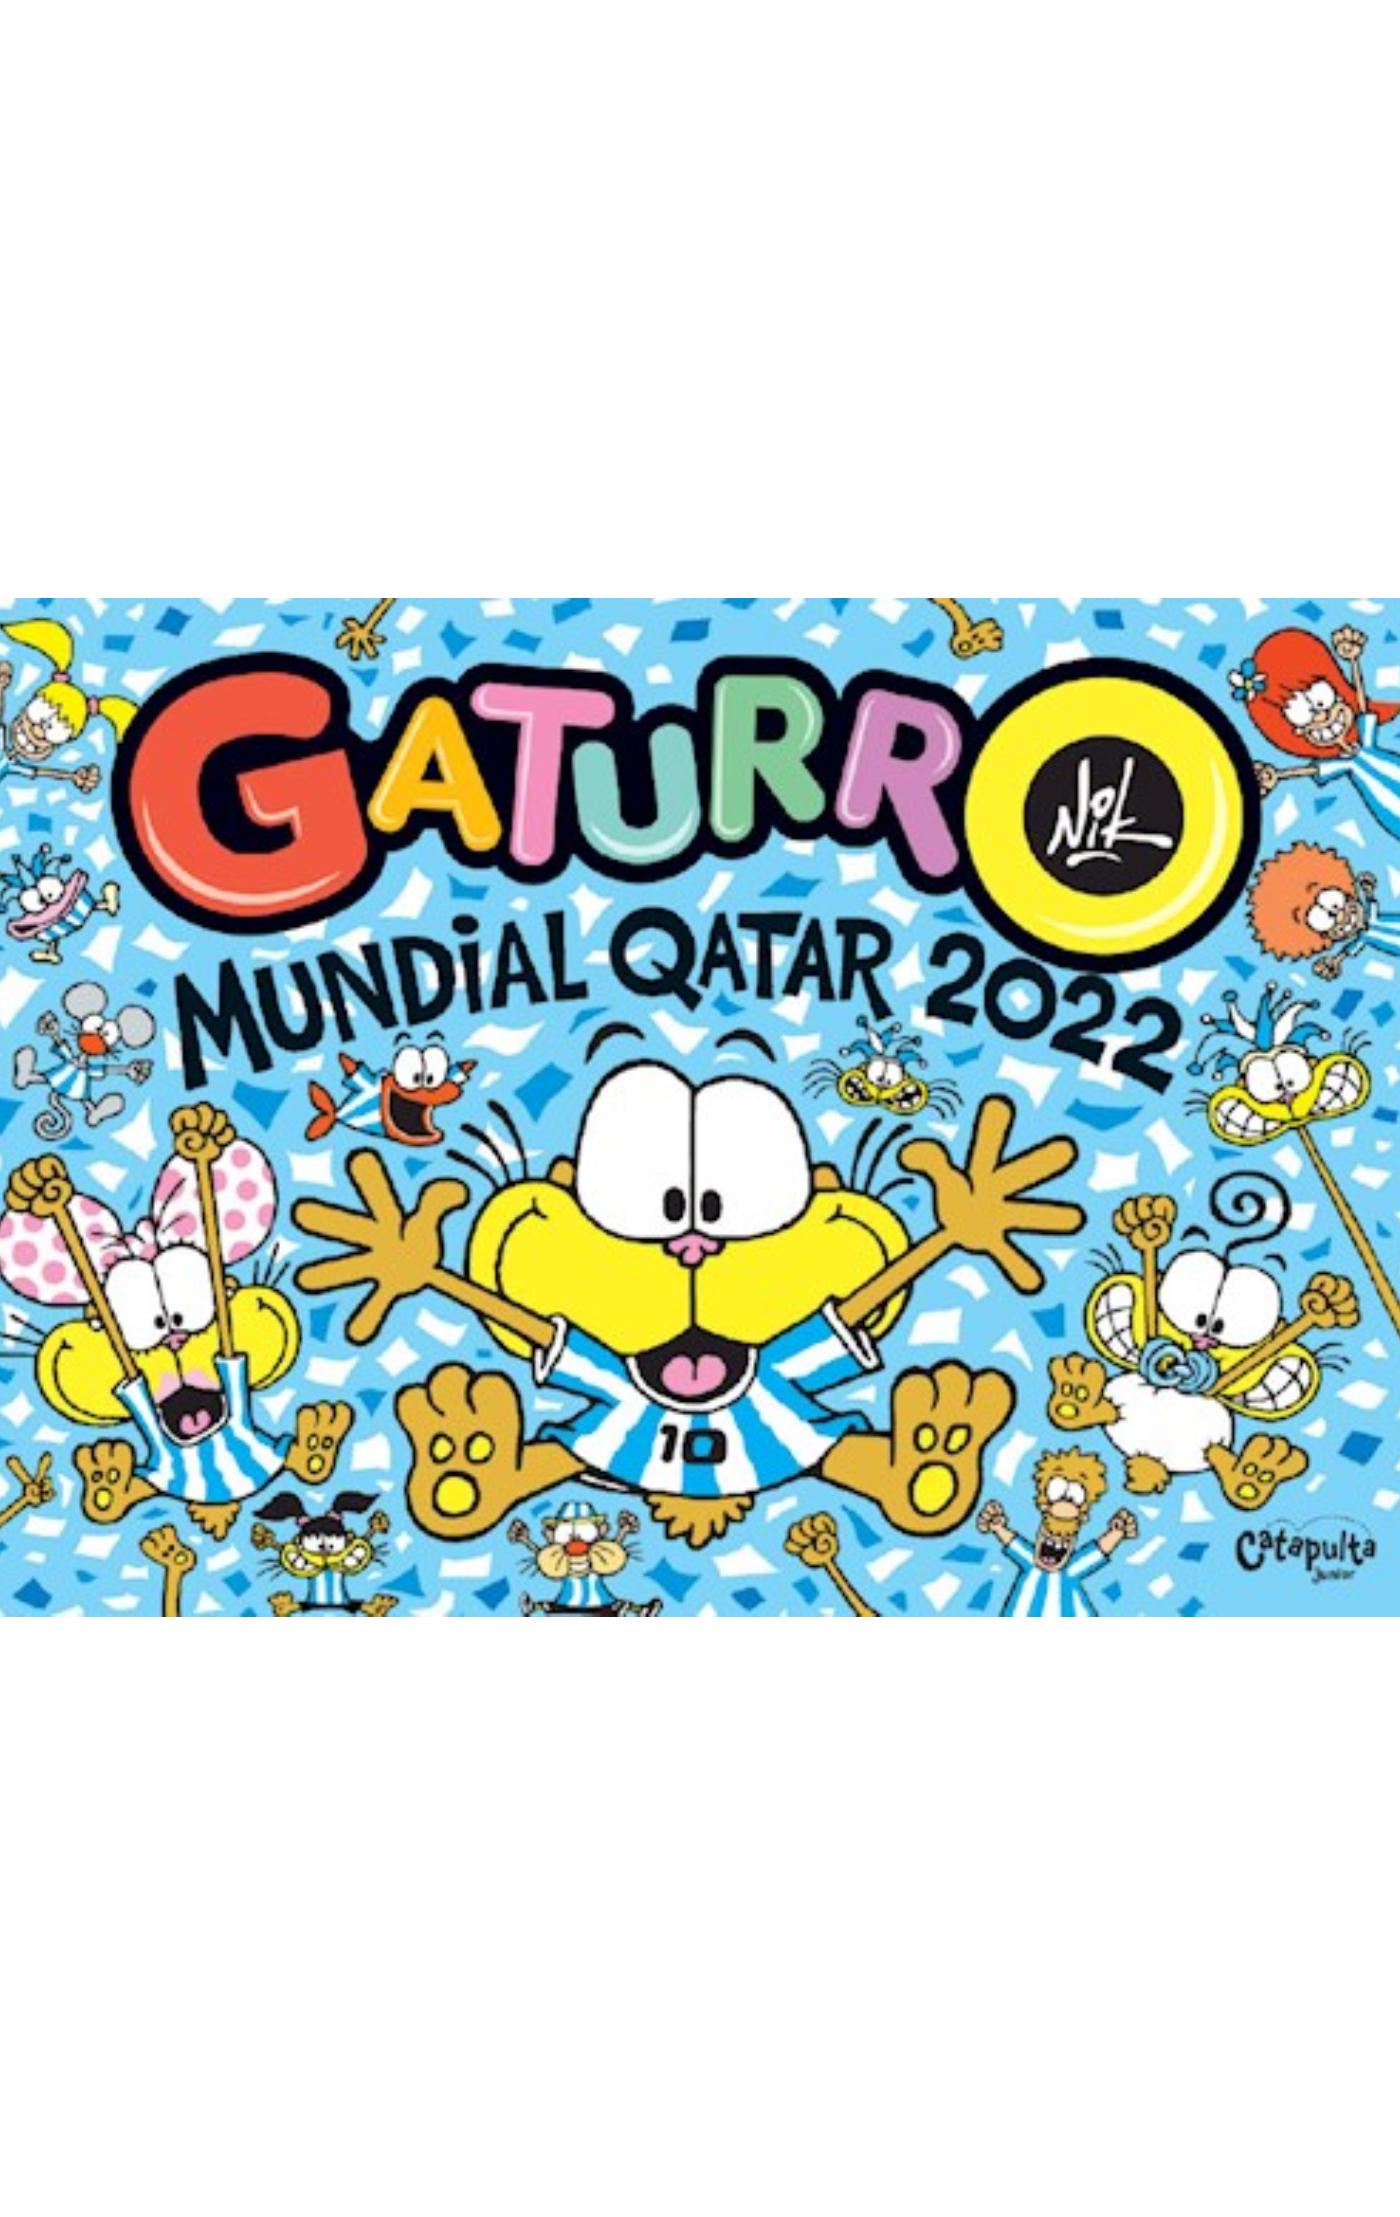 Gaturro Mundial Qatar 2022